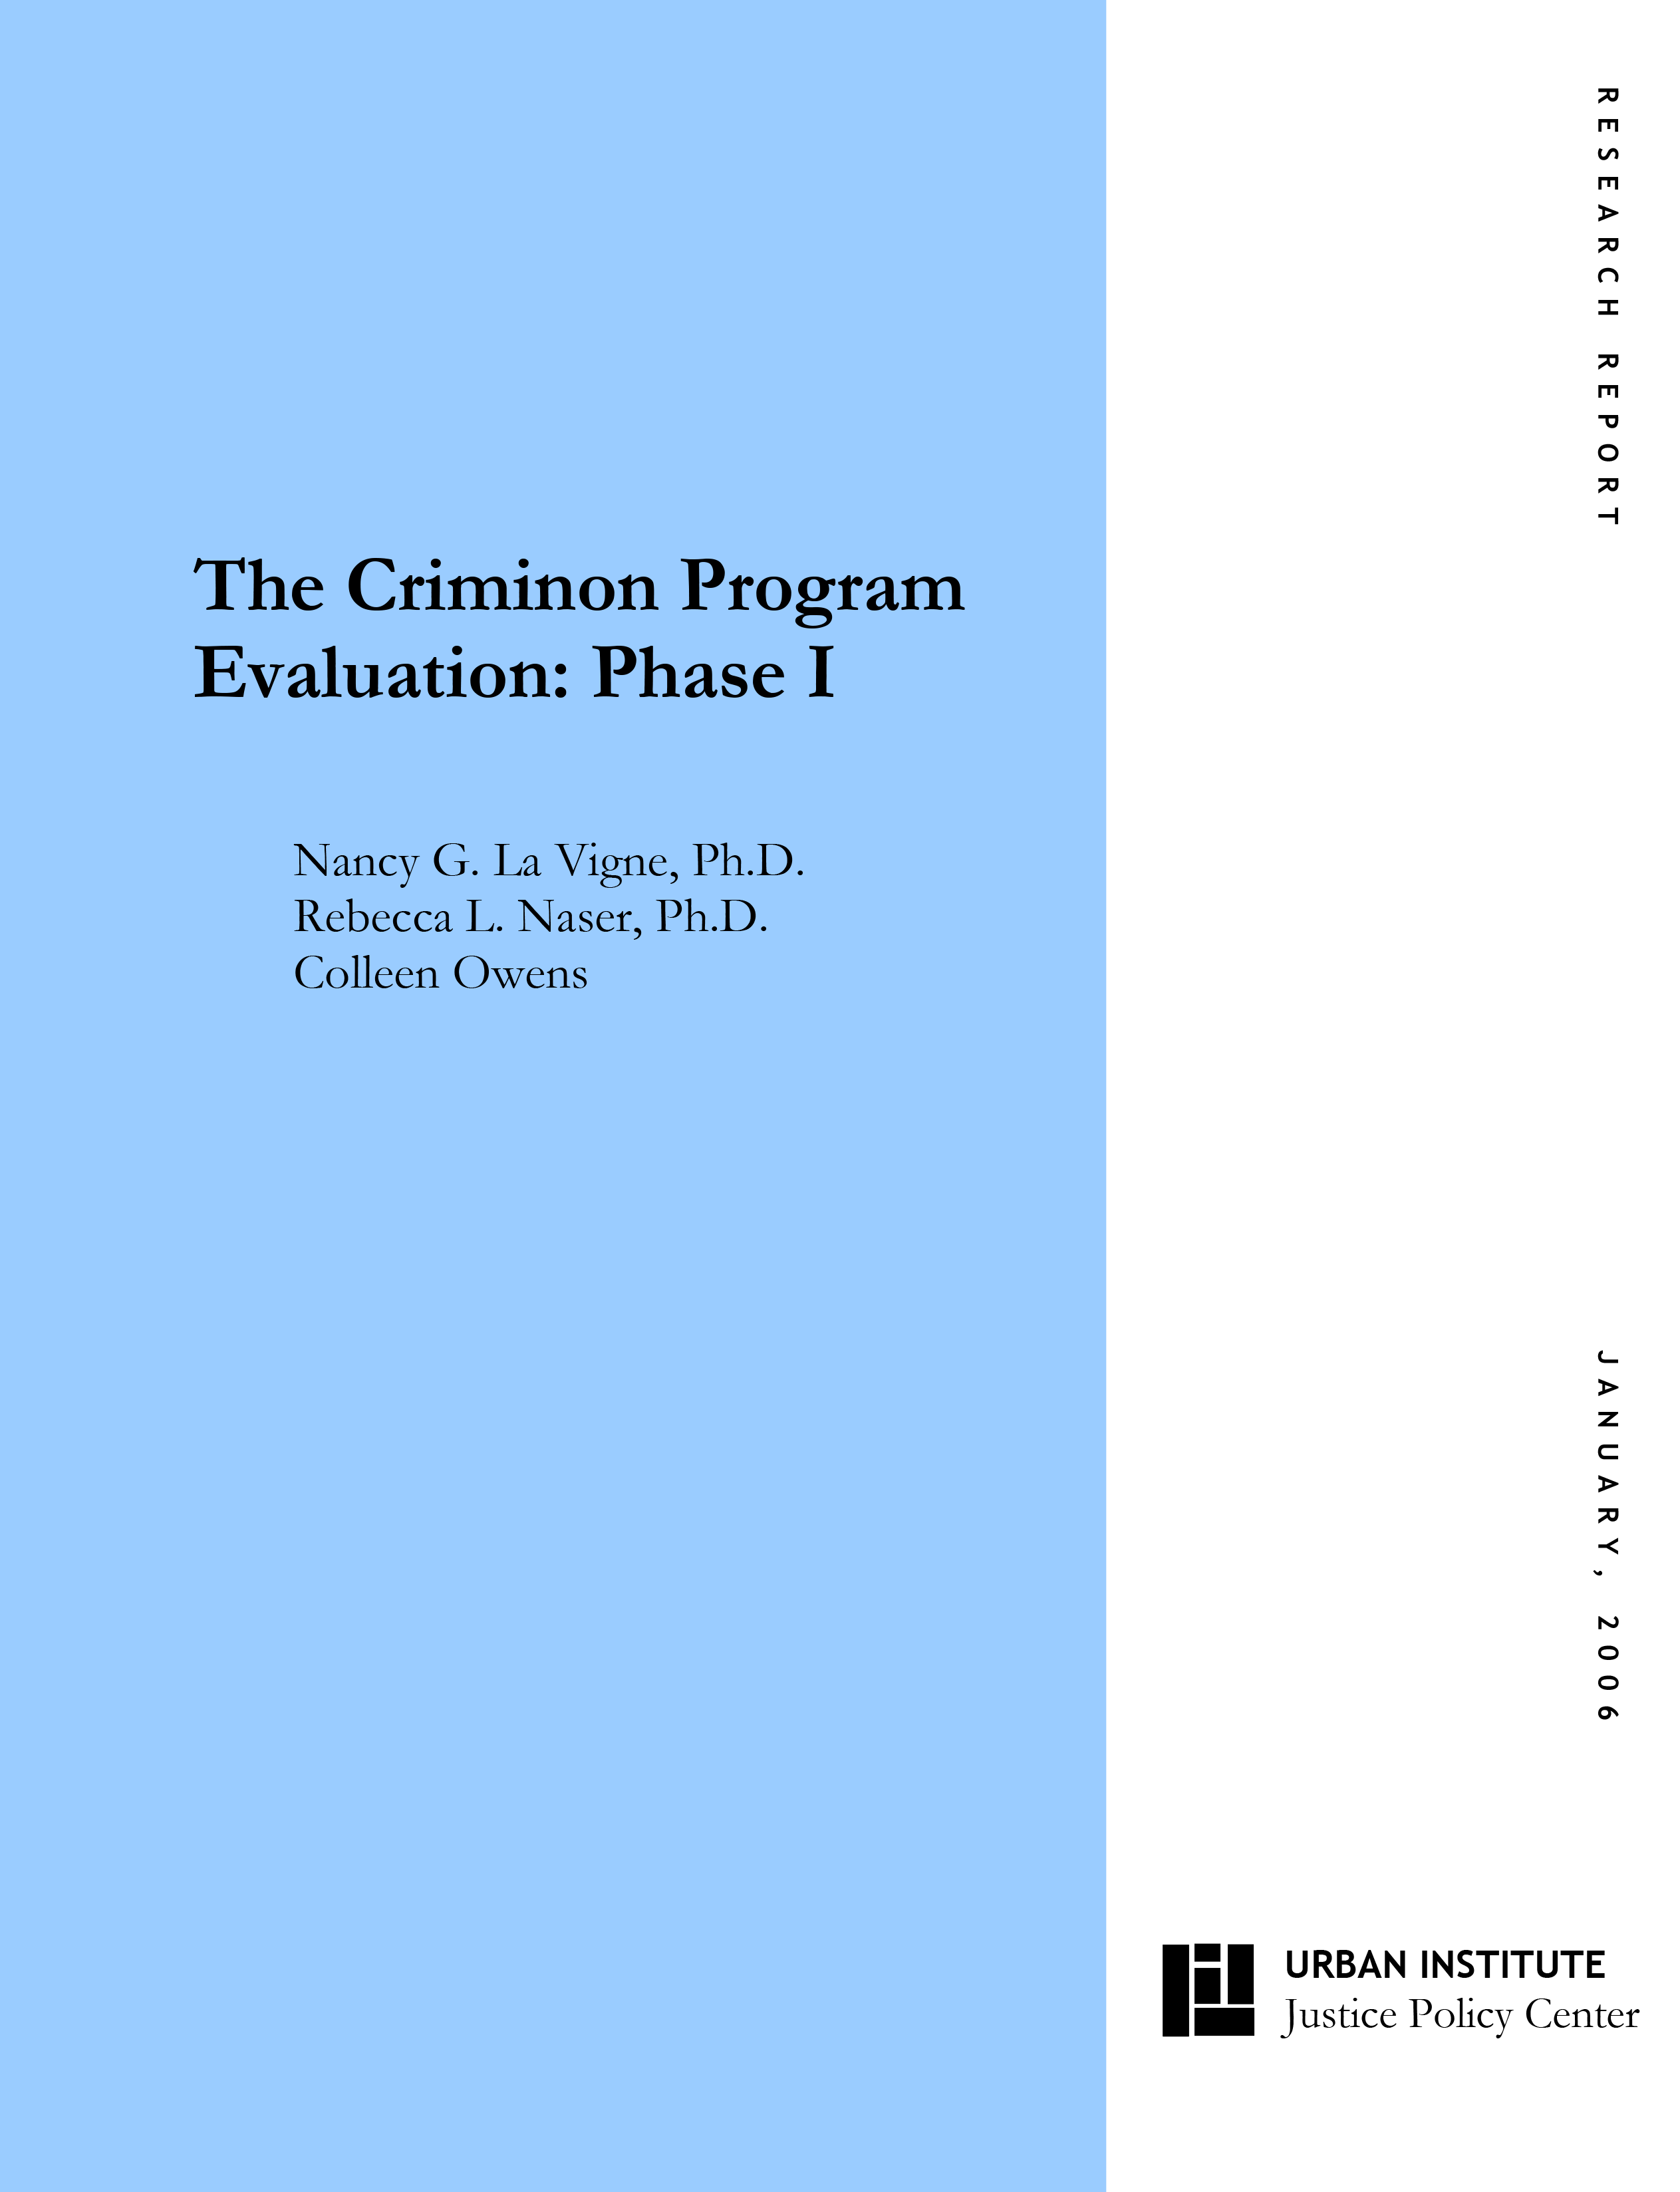 The Criminon Program Evaluation Phase 1 The Urban Institute